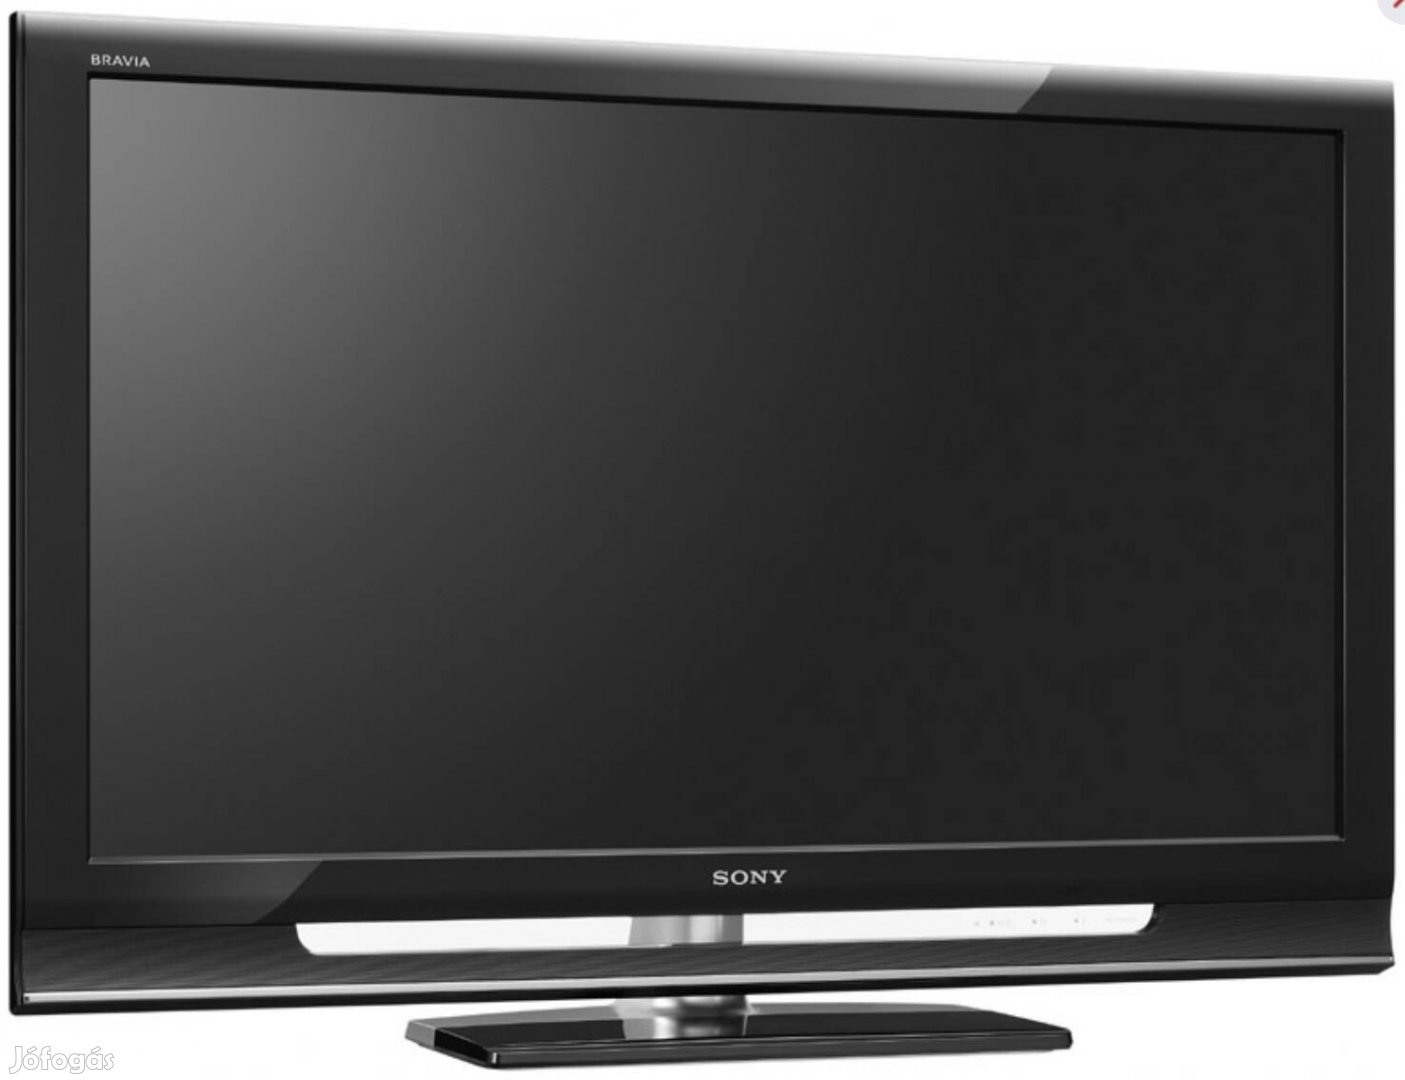 Sony Kdl-46W4500 (117cm) Full HD LCD TV eladó